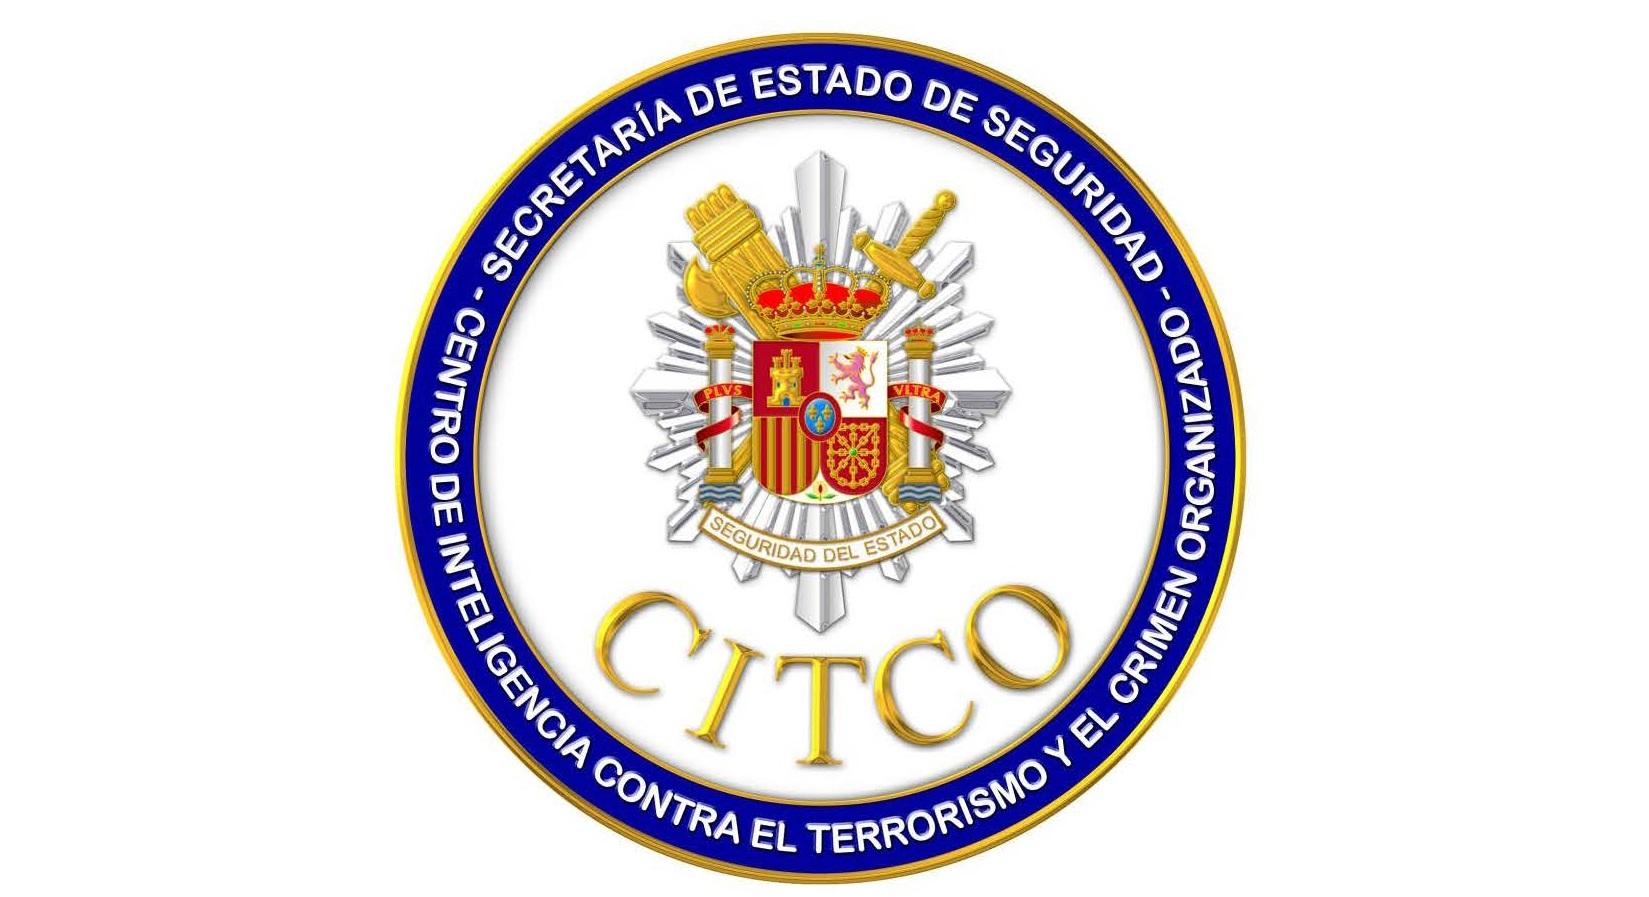 Imagen institucional del CITCO